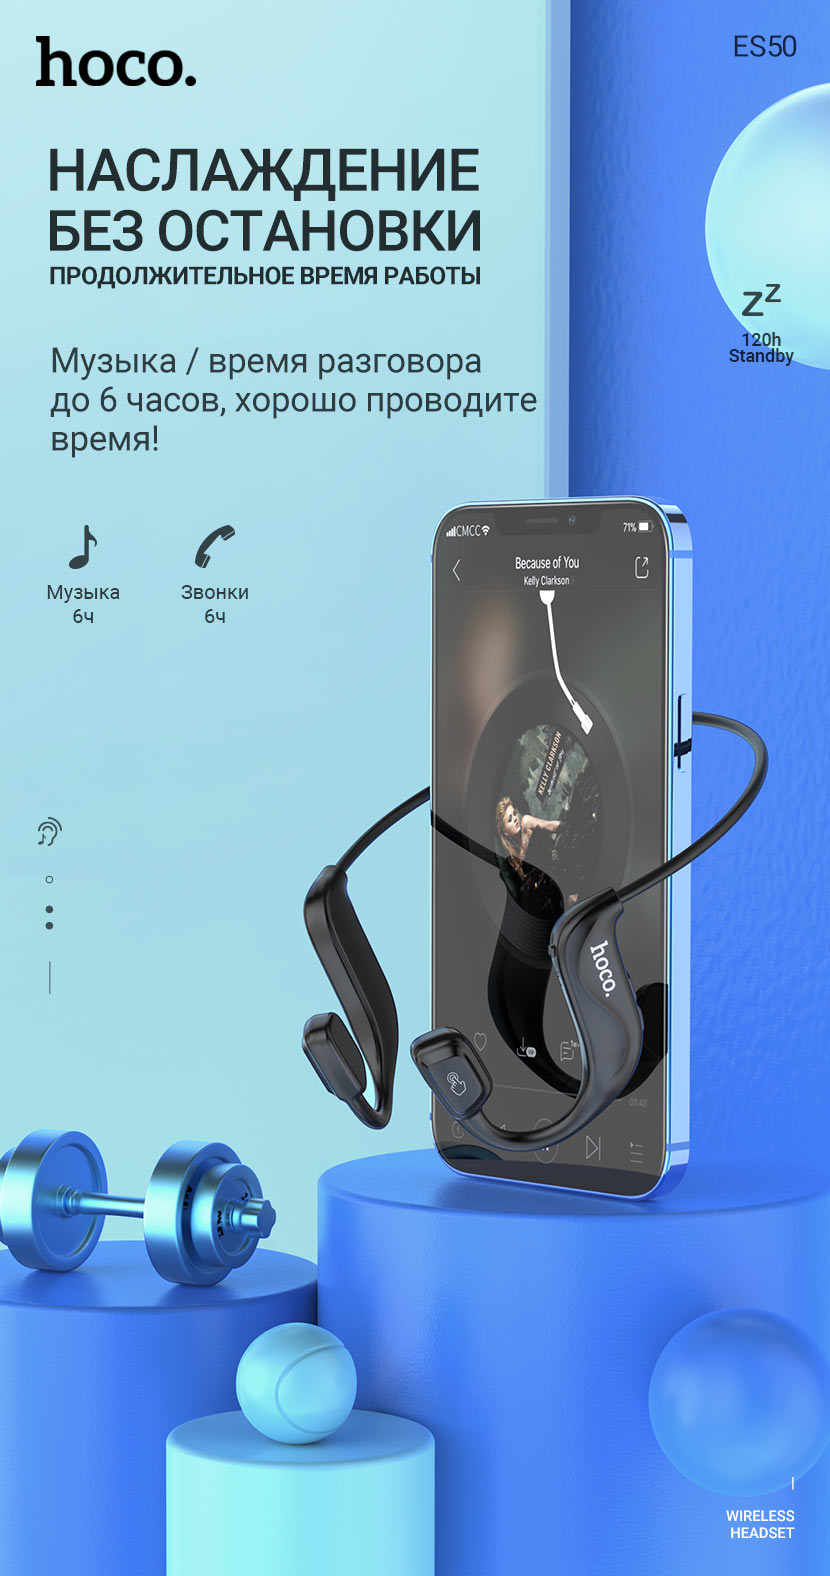 hoco news es50 rima air conduction bt headset battery ru